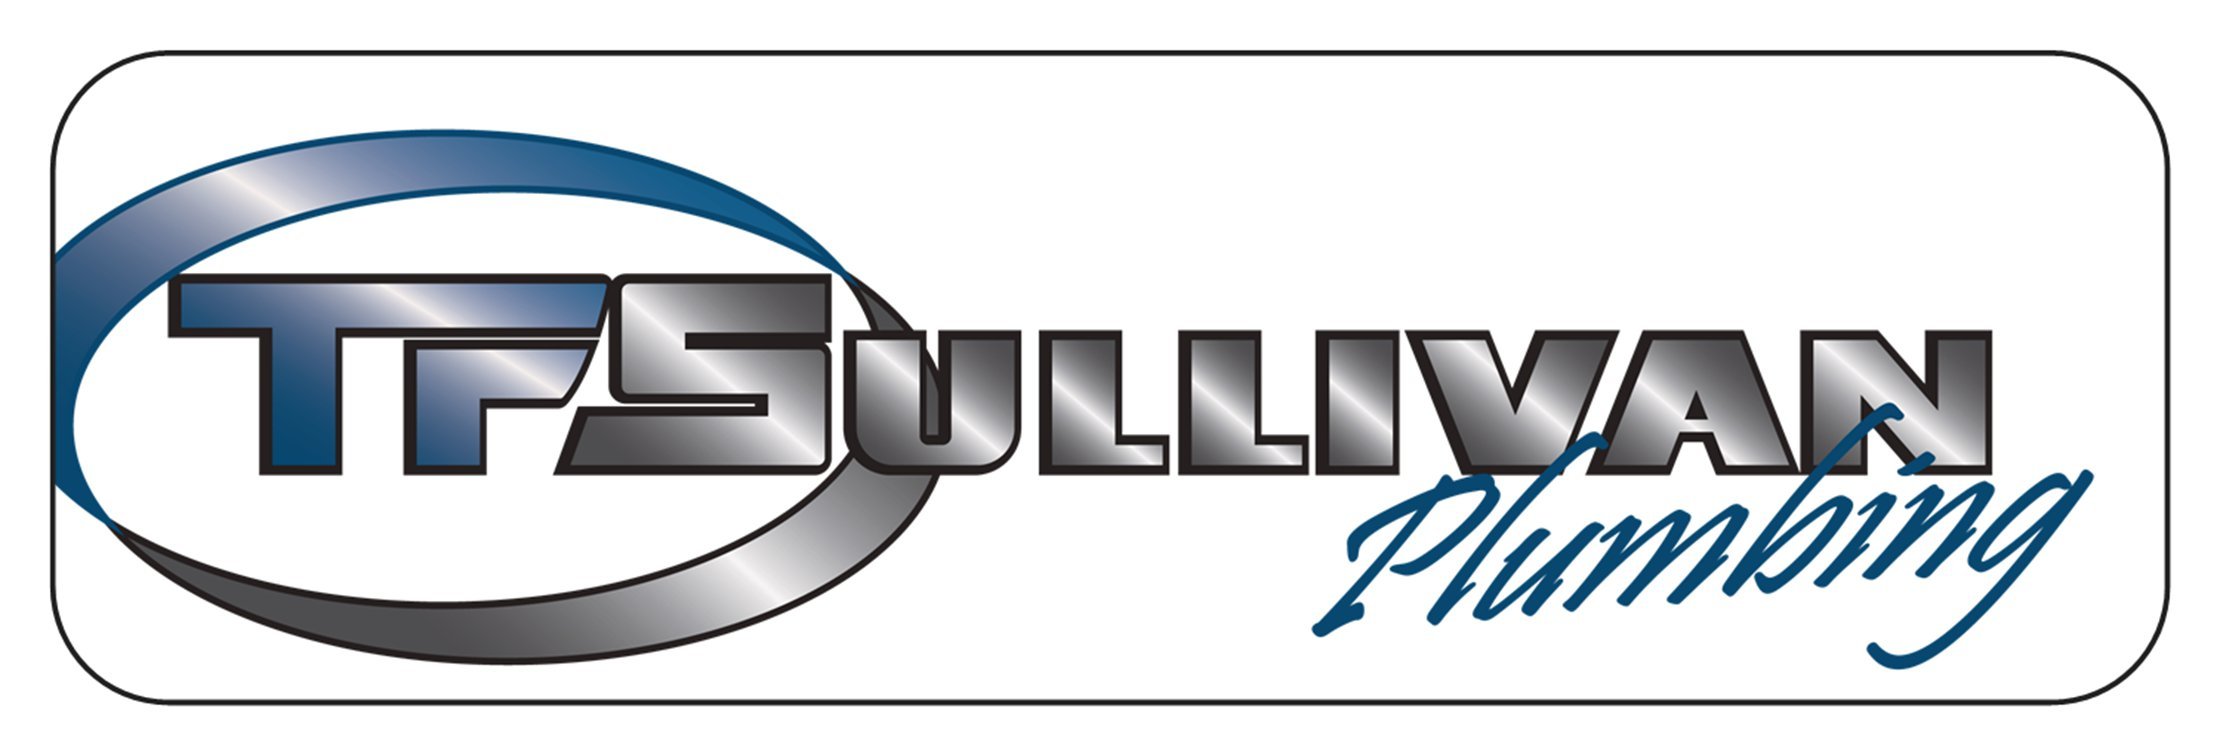 T.F. Sullivan Plumbing, Inc. Logo